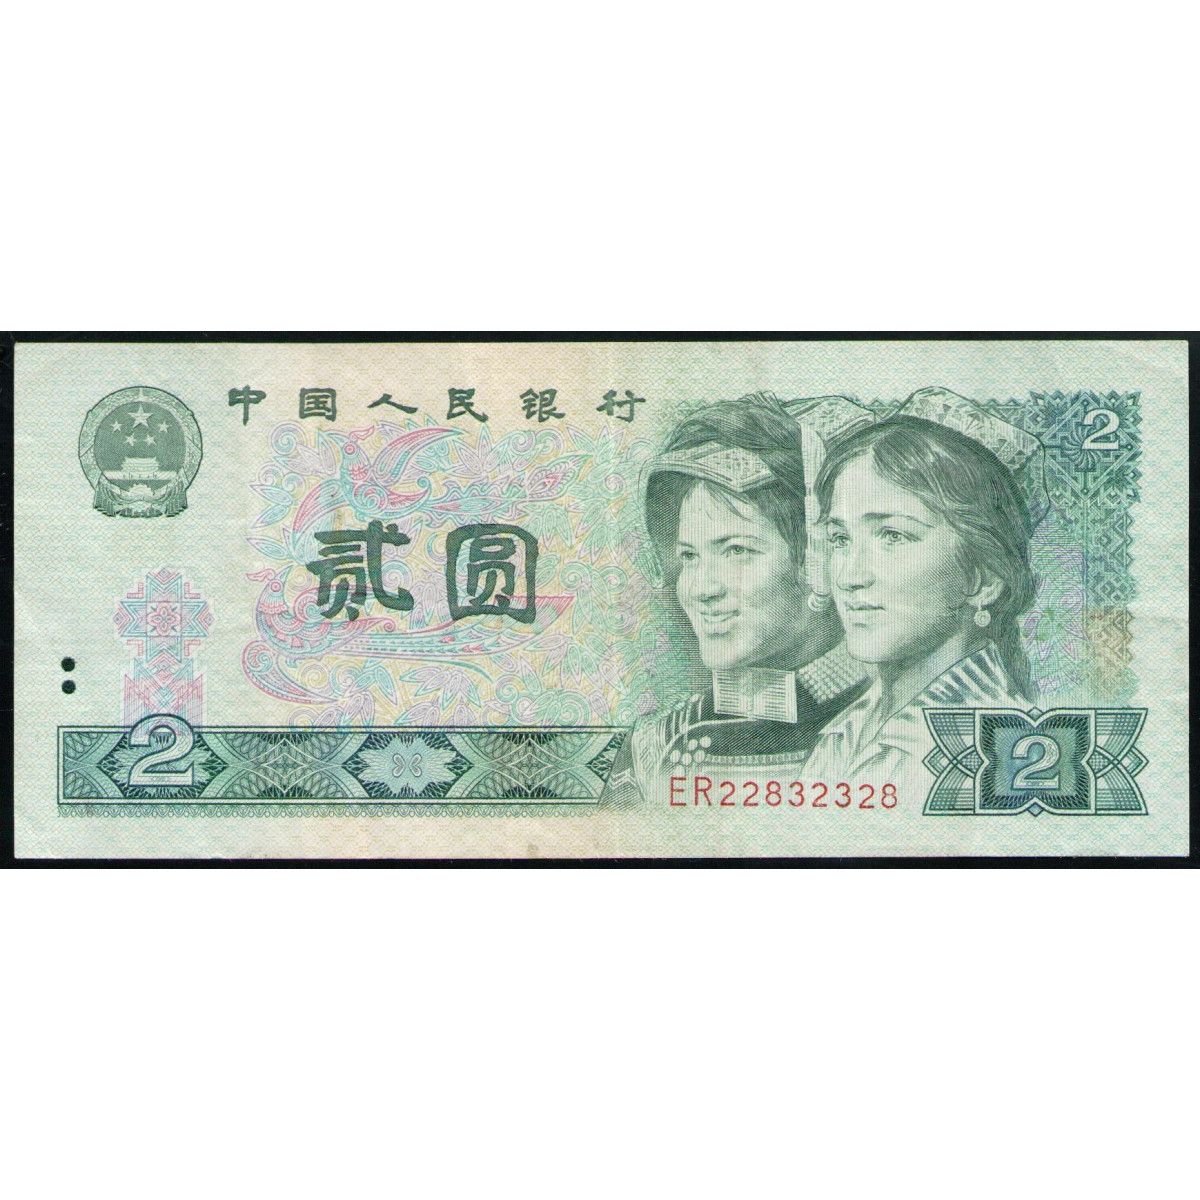 Миллион юаней это сколько рублей. 2 Юаня 1980. Китайский юань 1980. Китай купюра 2 юаня 1980 года. 2 Юаня банкнота.